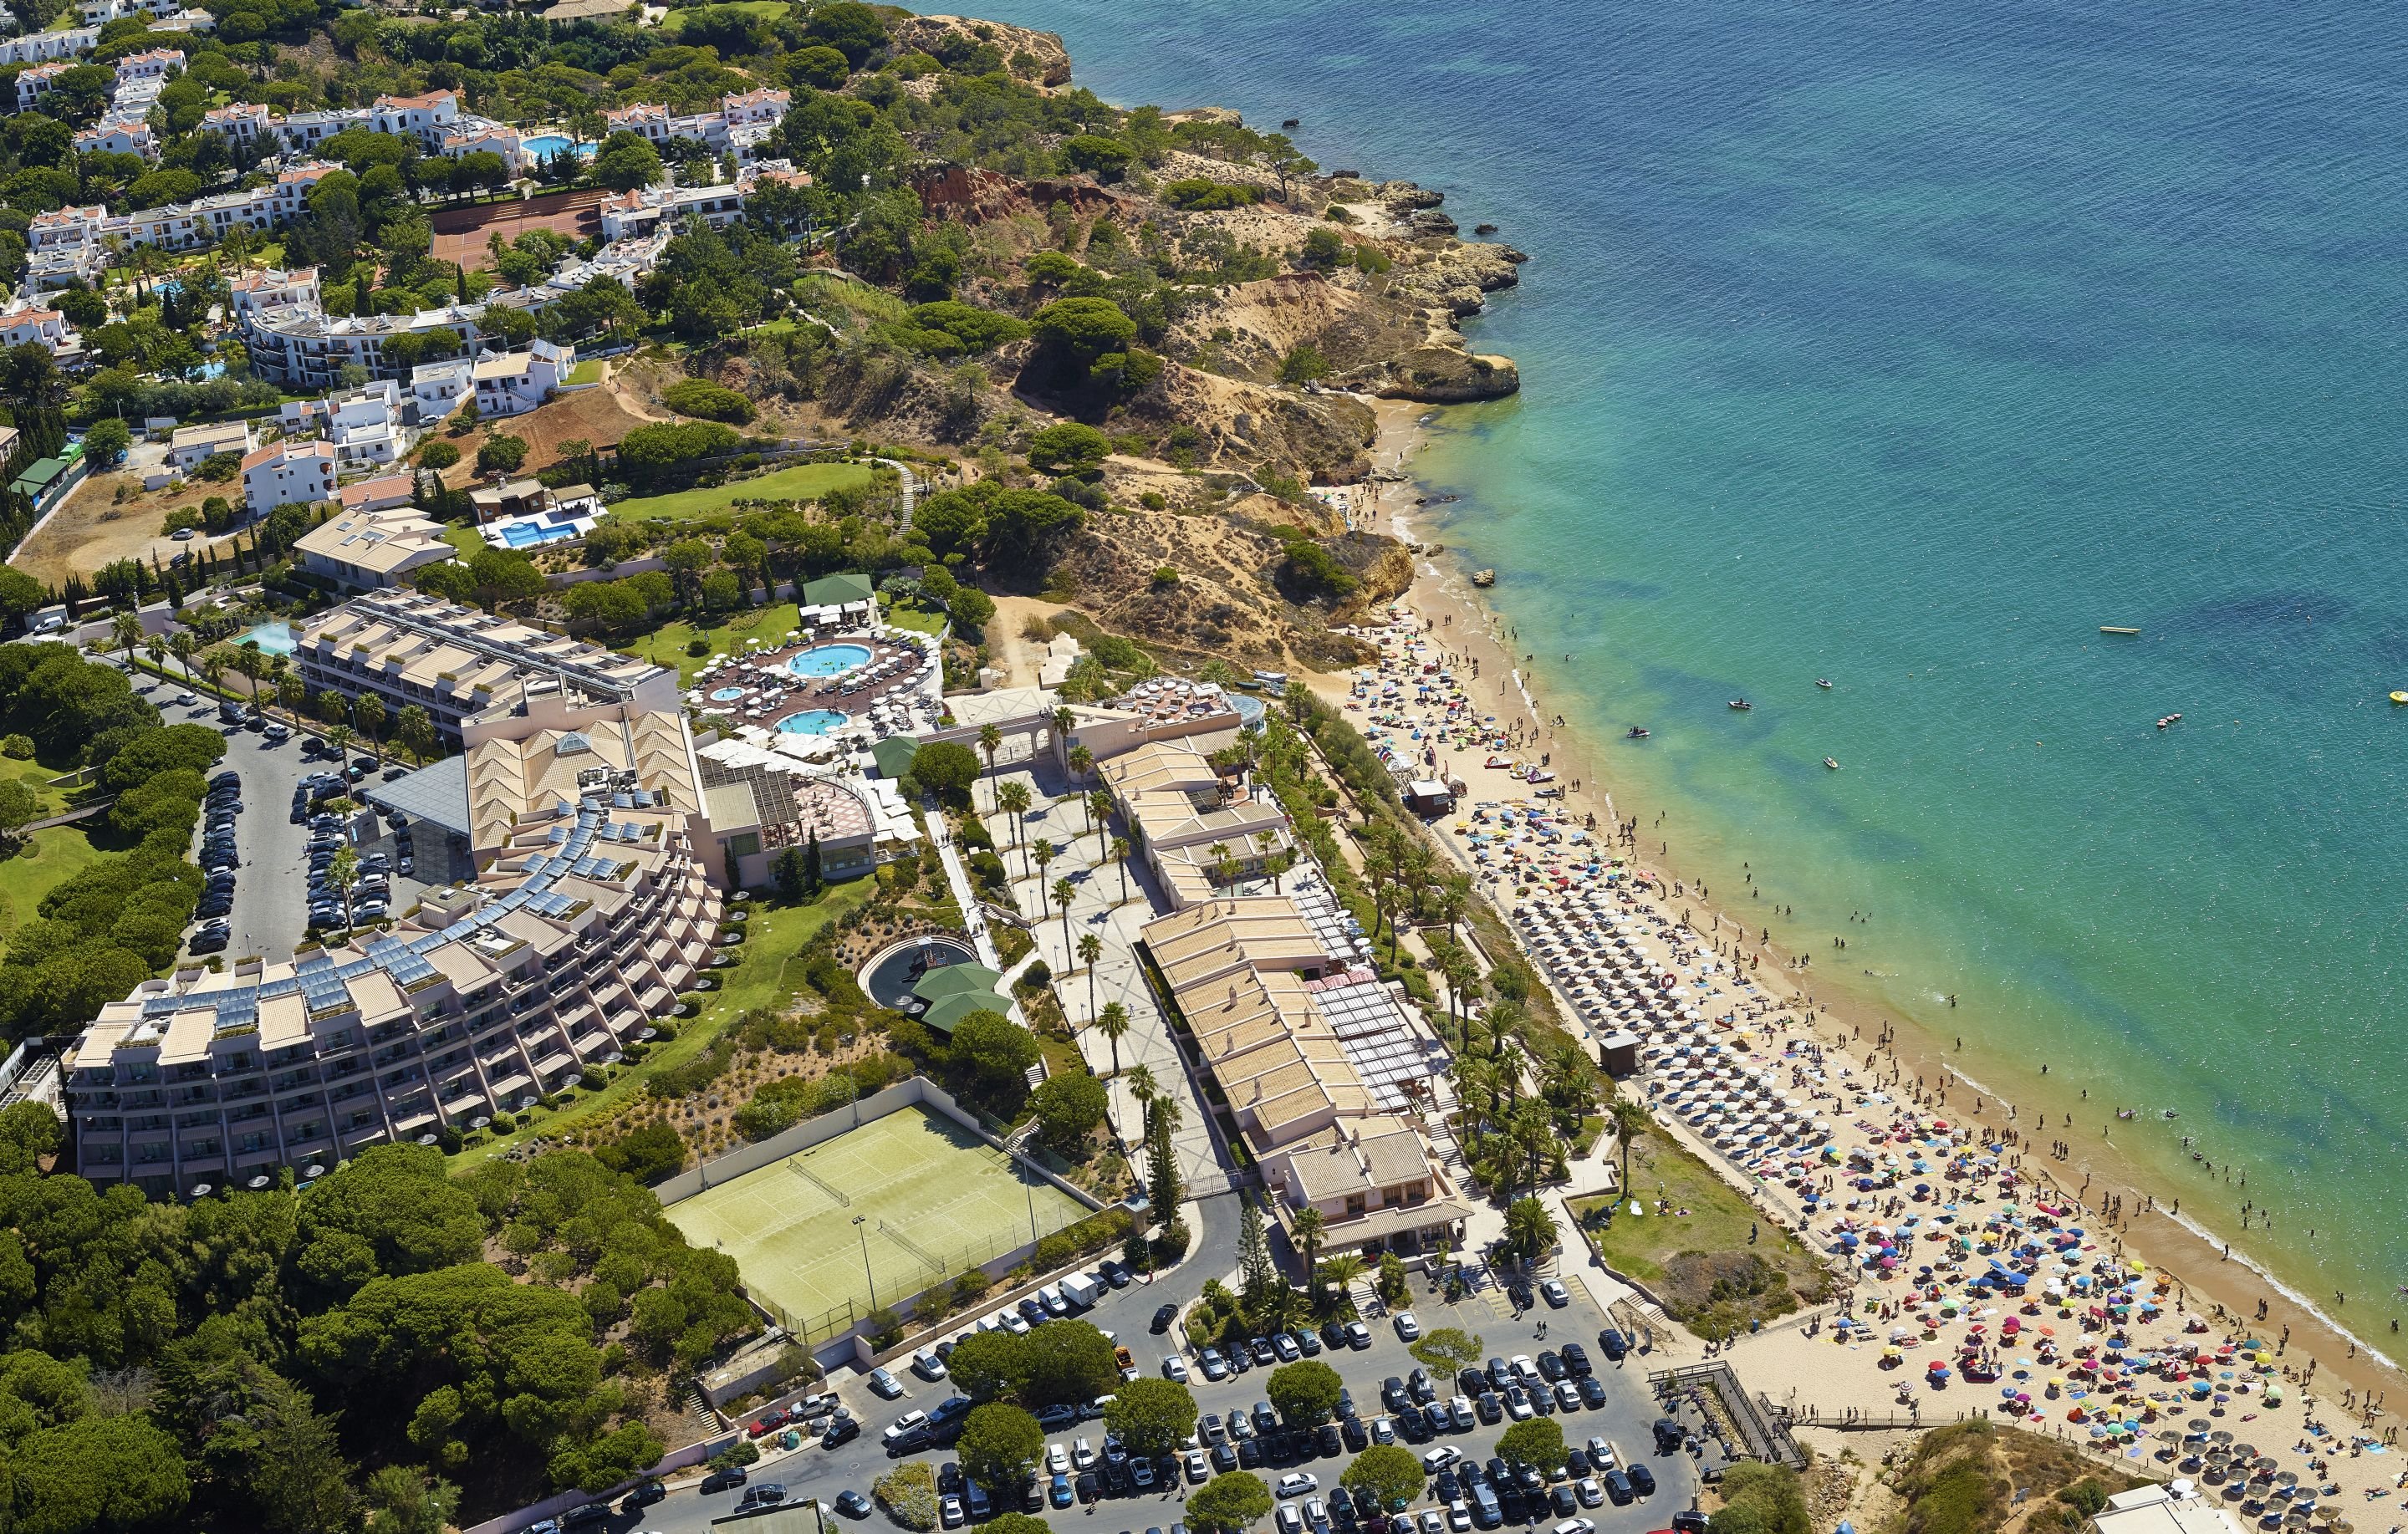 Grande Real Santa Eulalia Resort & Hotel Spa image